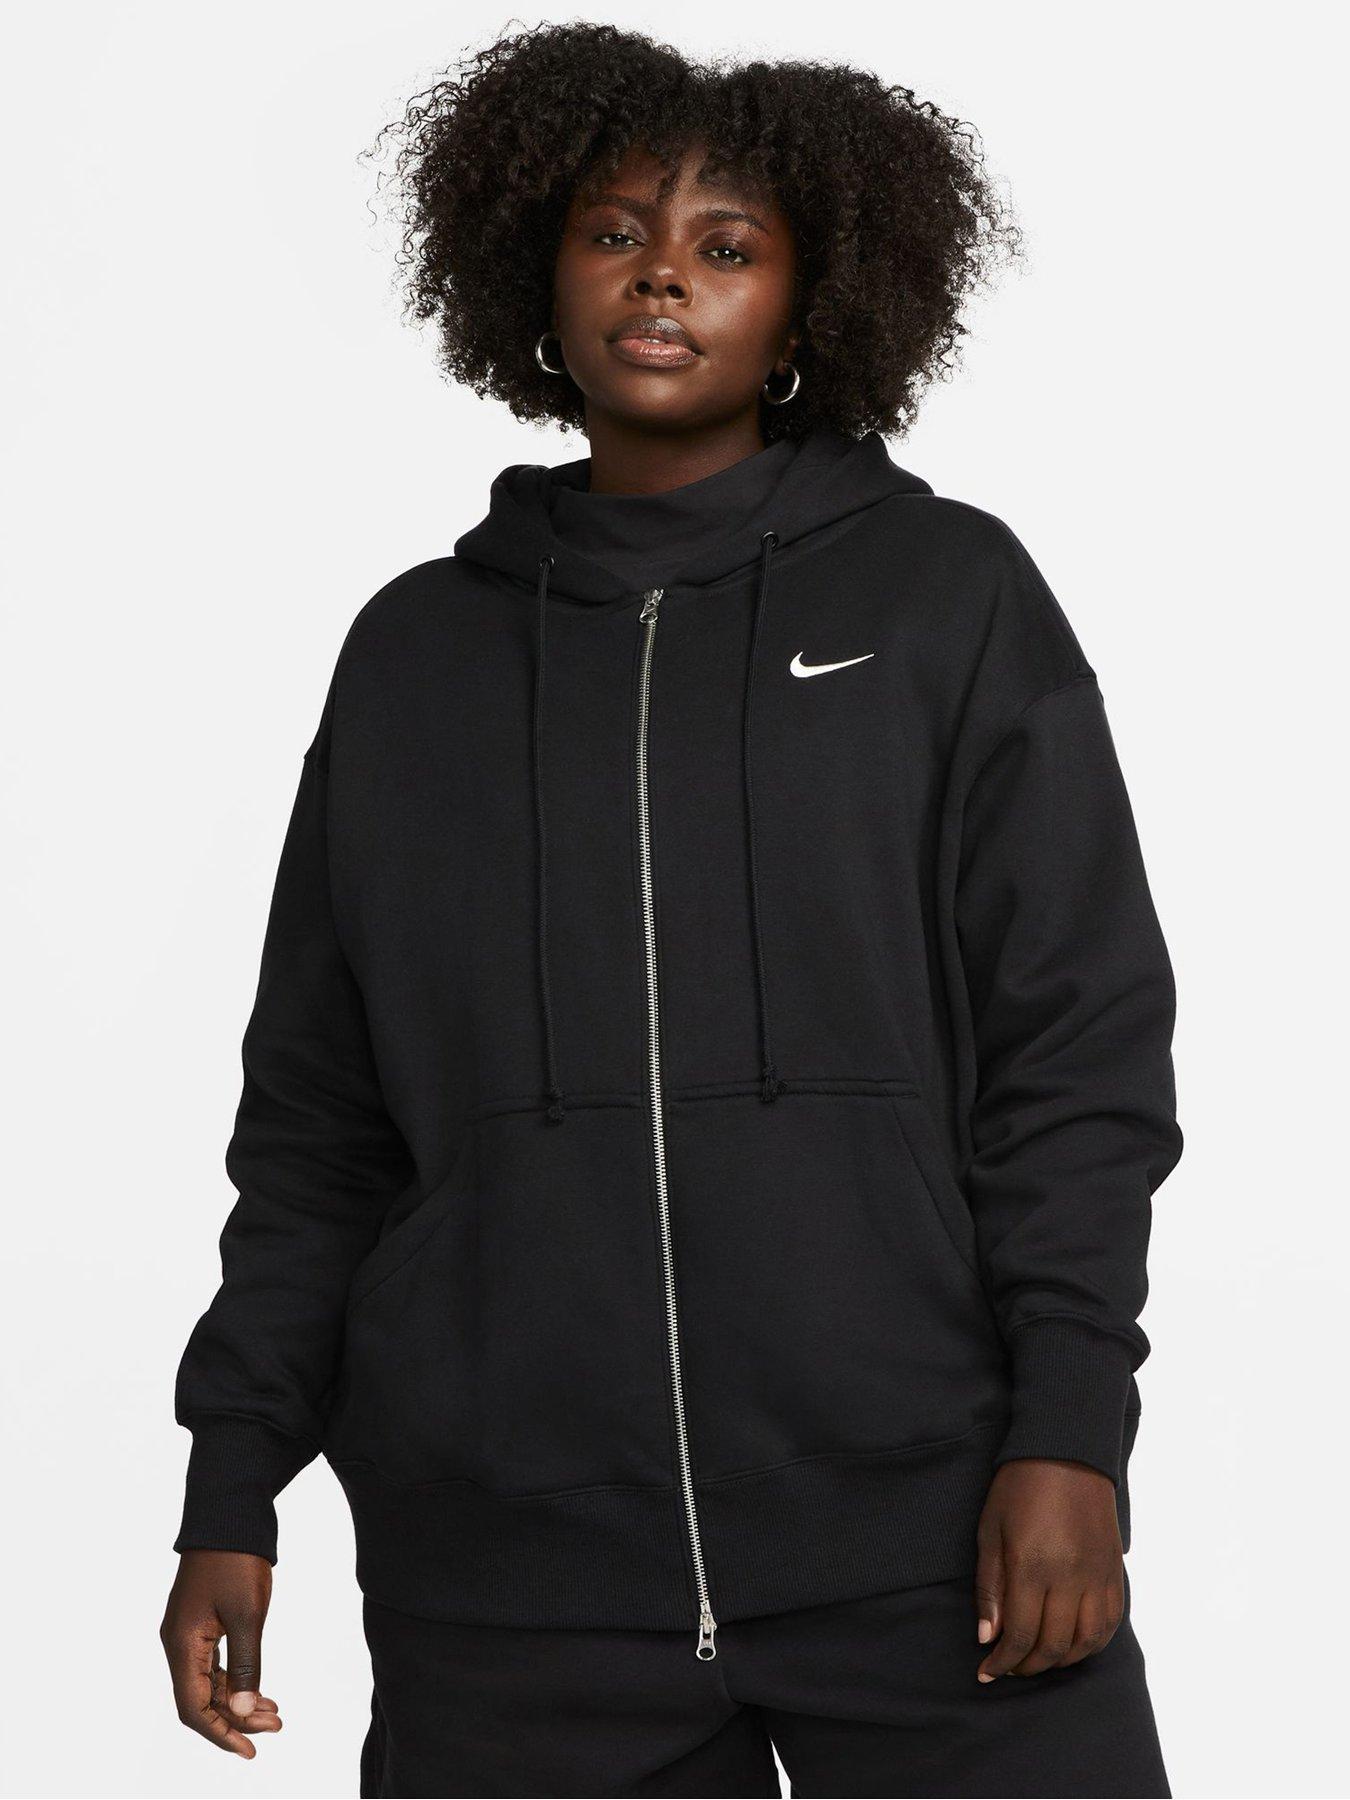 Nike Women's NSW Pheonix Fleece Black Pant - Puffer Reds